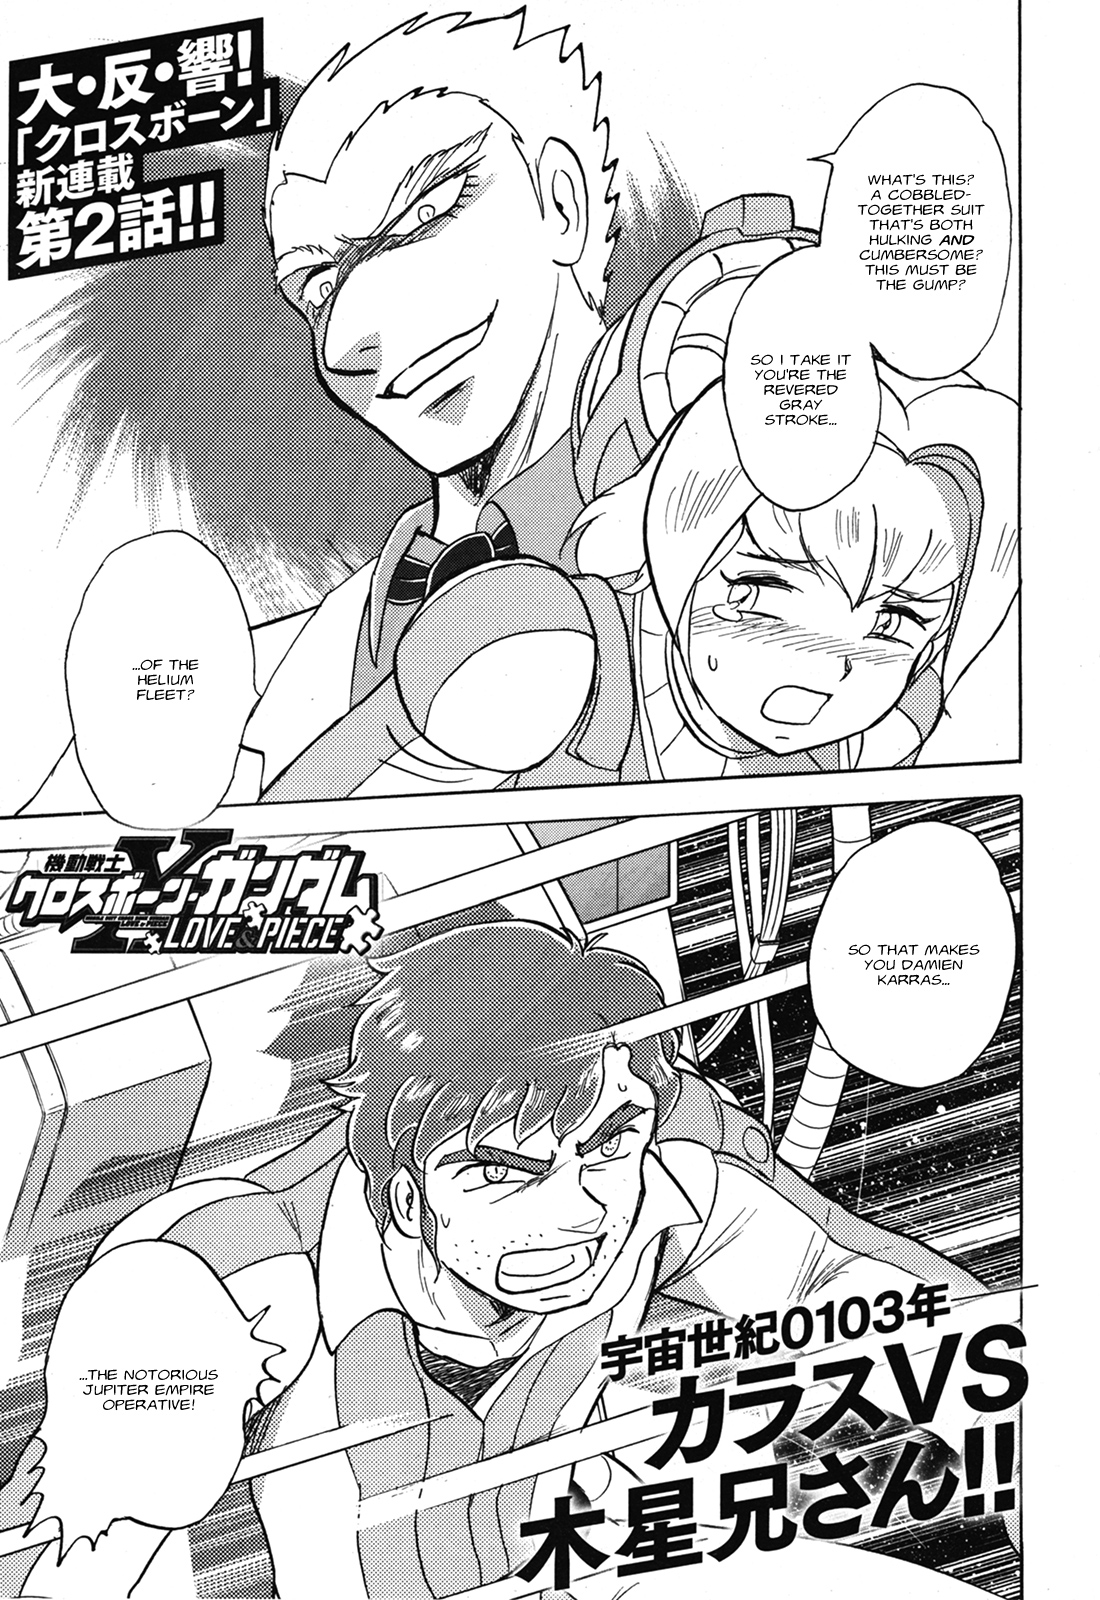 Mobile Suit Crossbone Gundam - Love & Piece - Page 2